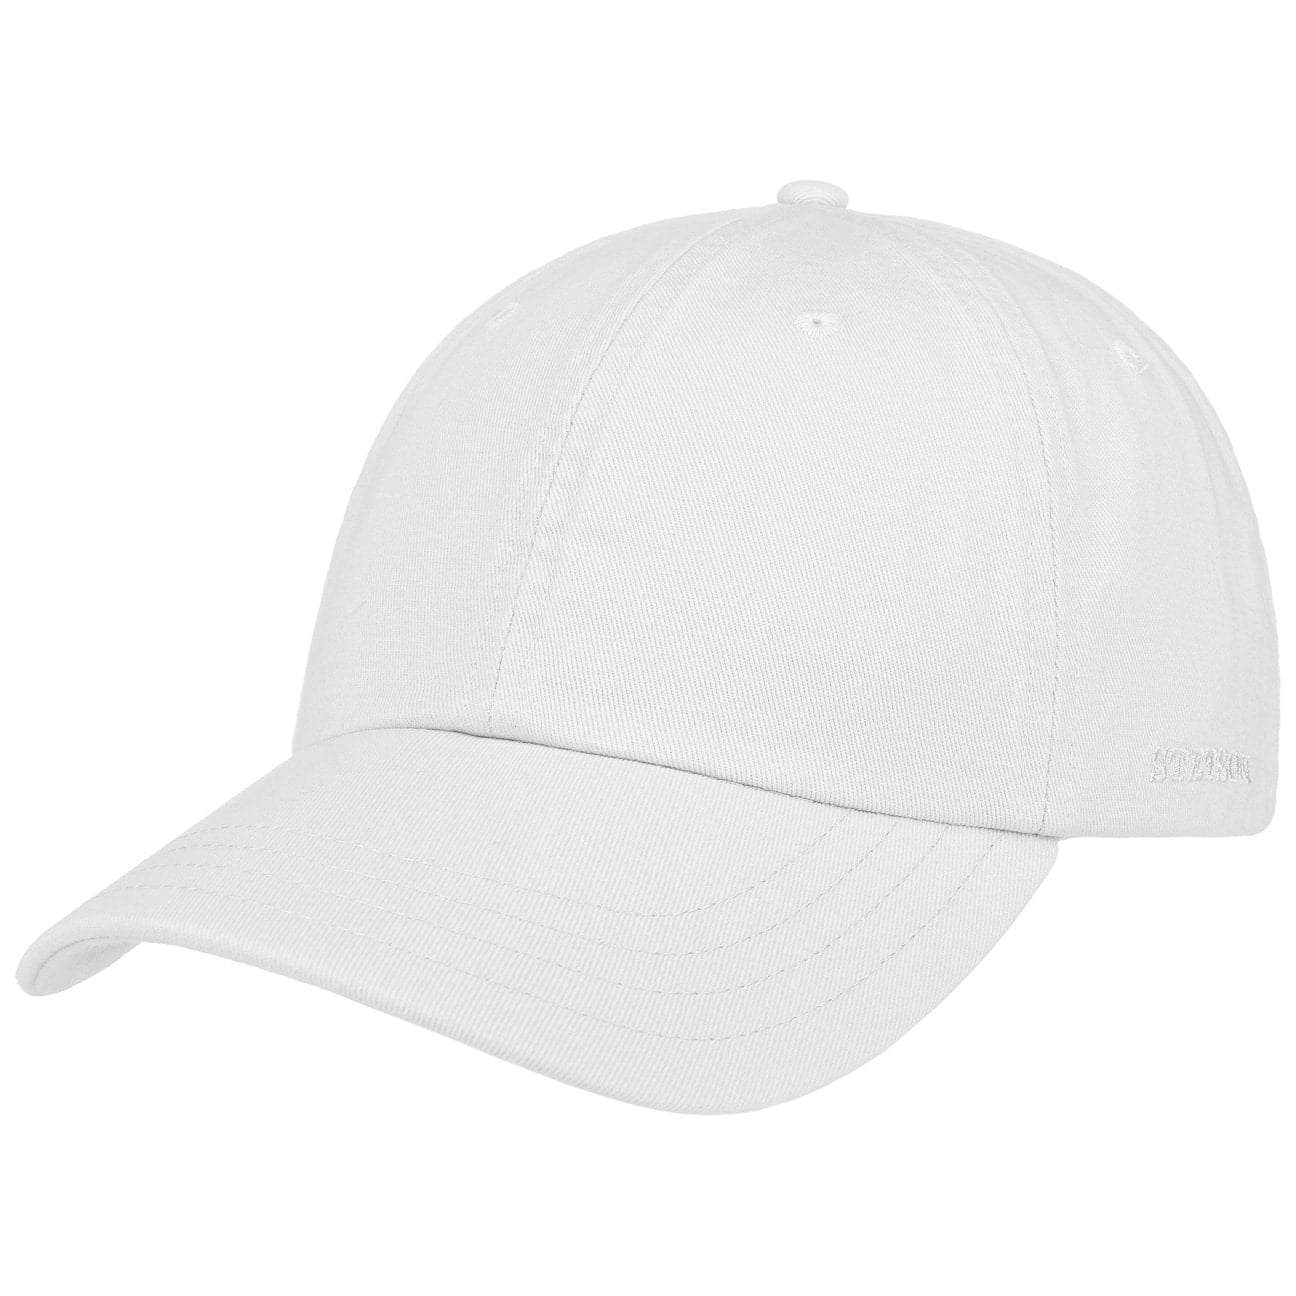 Stetson 7711101 10 Rector baseball cap white